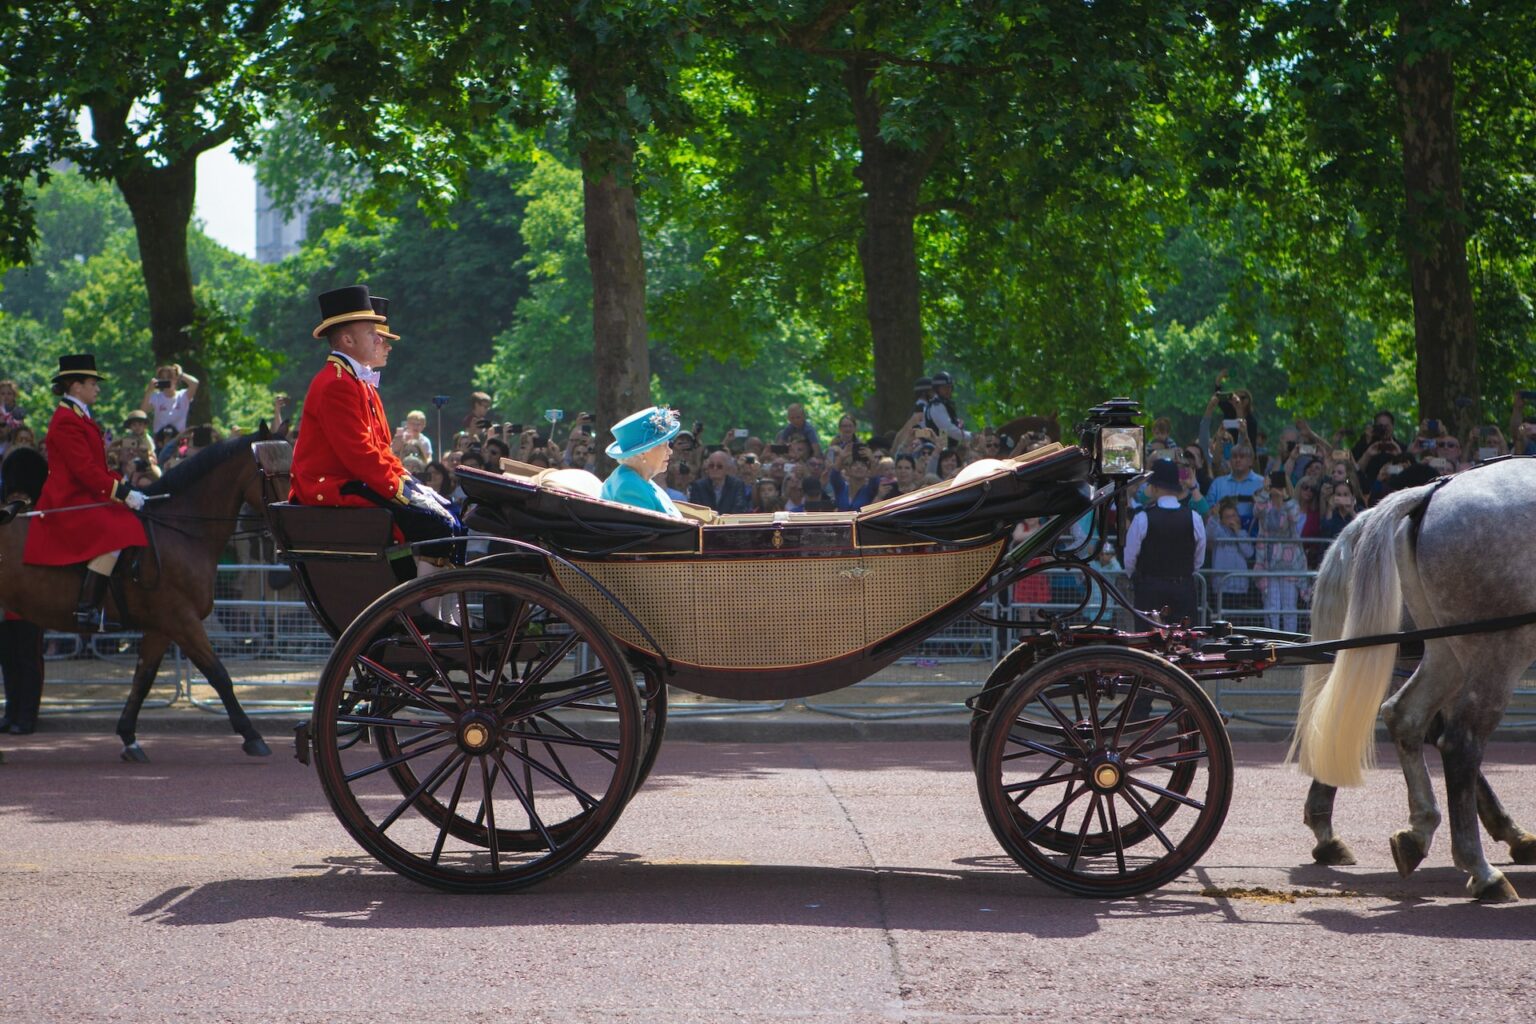 Queen Elizabeth 2 in a horse-drawn carriage